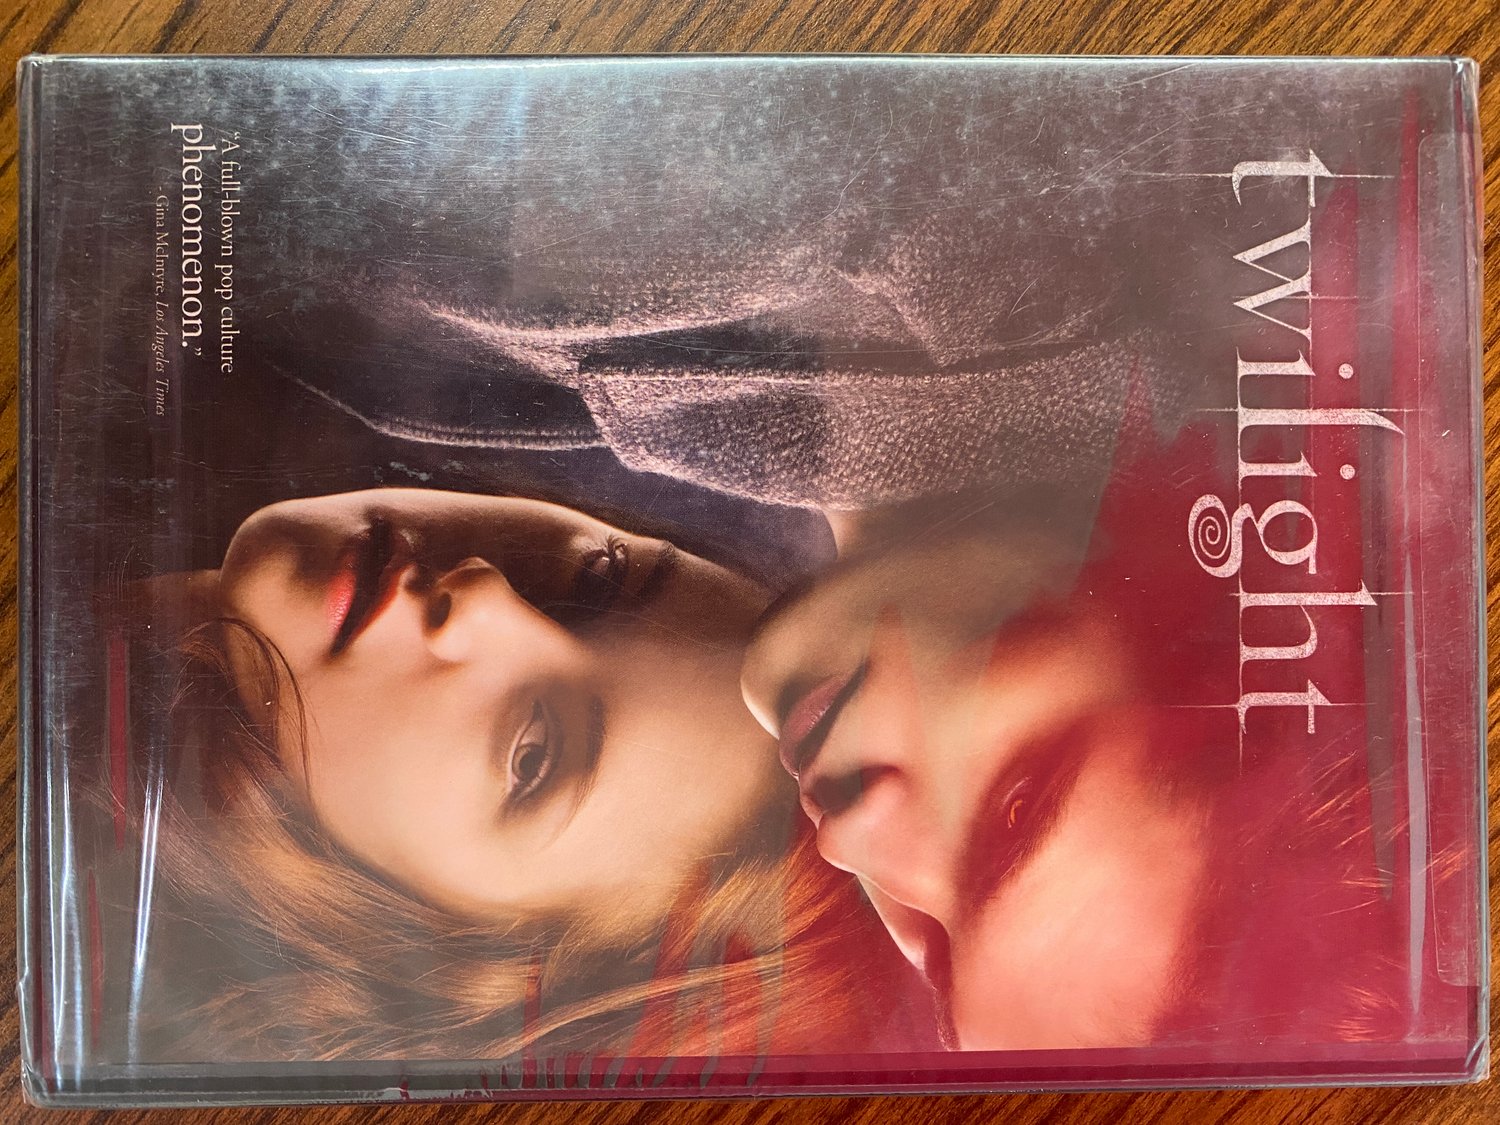 Image of 14 New Sealed Copies Twilight DVD Bulk Lot